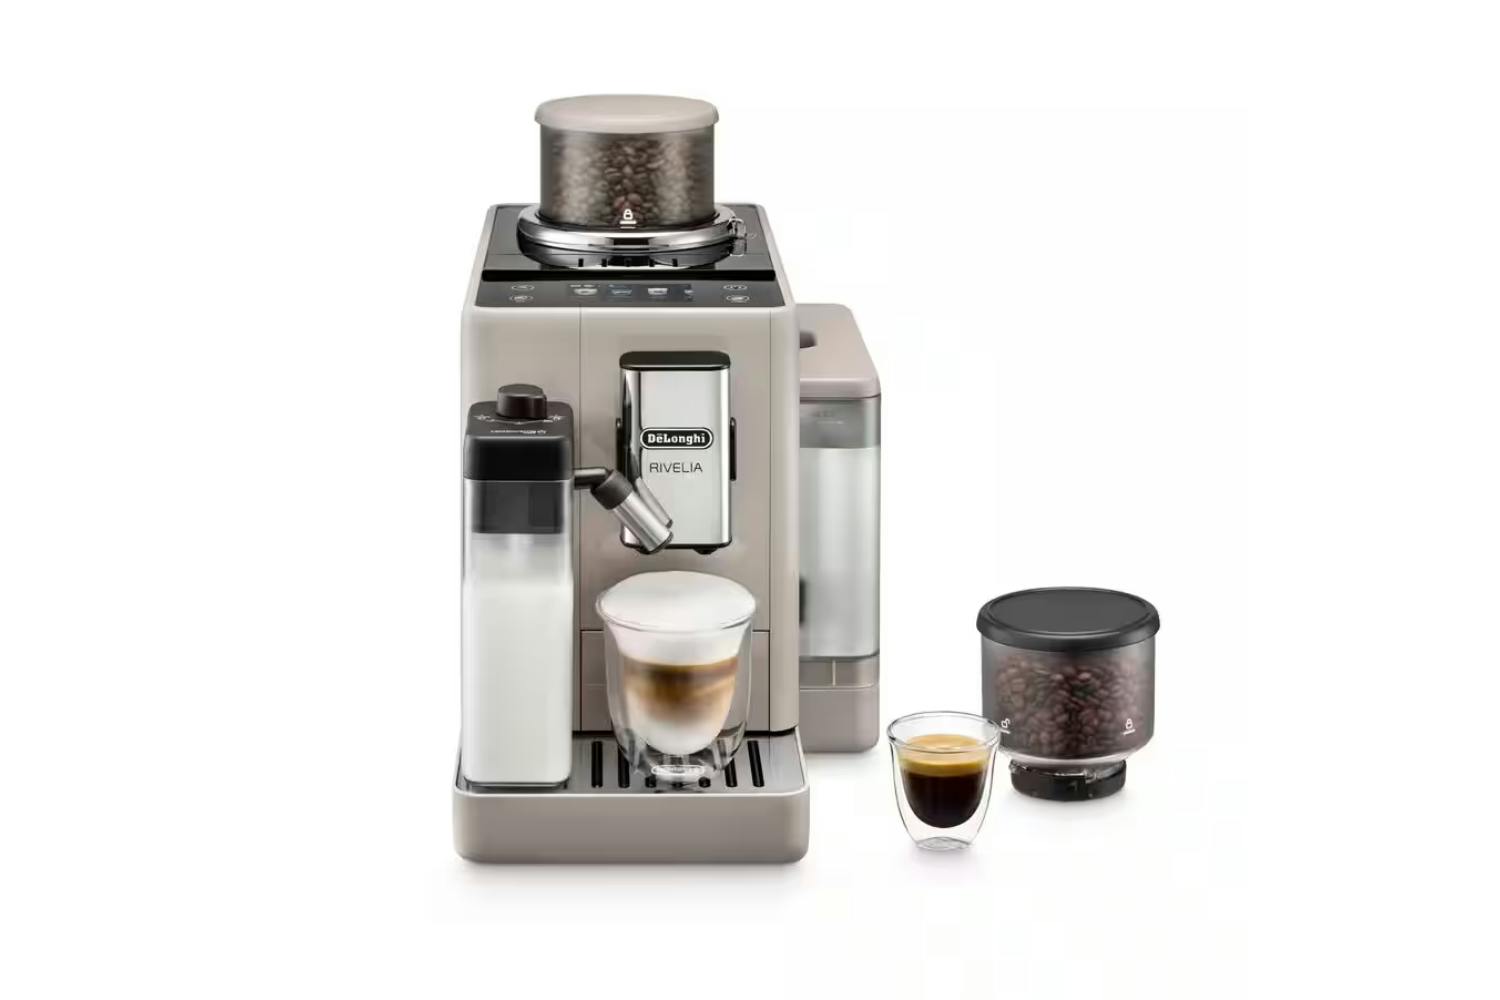 DeLonghi Rivelia Automatic Compact Bean to Cup Coffee Machine | EXAM440.55.BG | Sand Beige